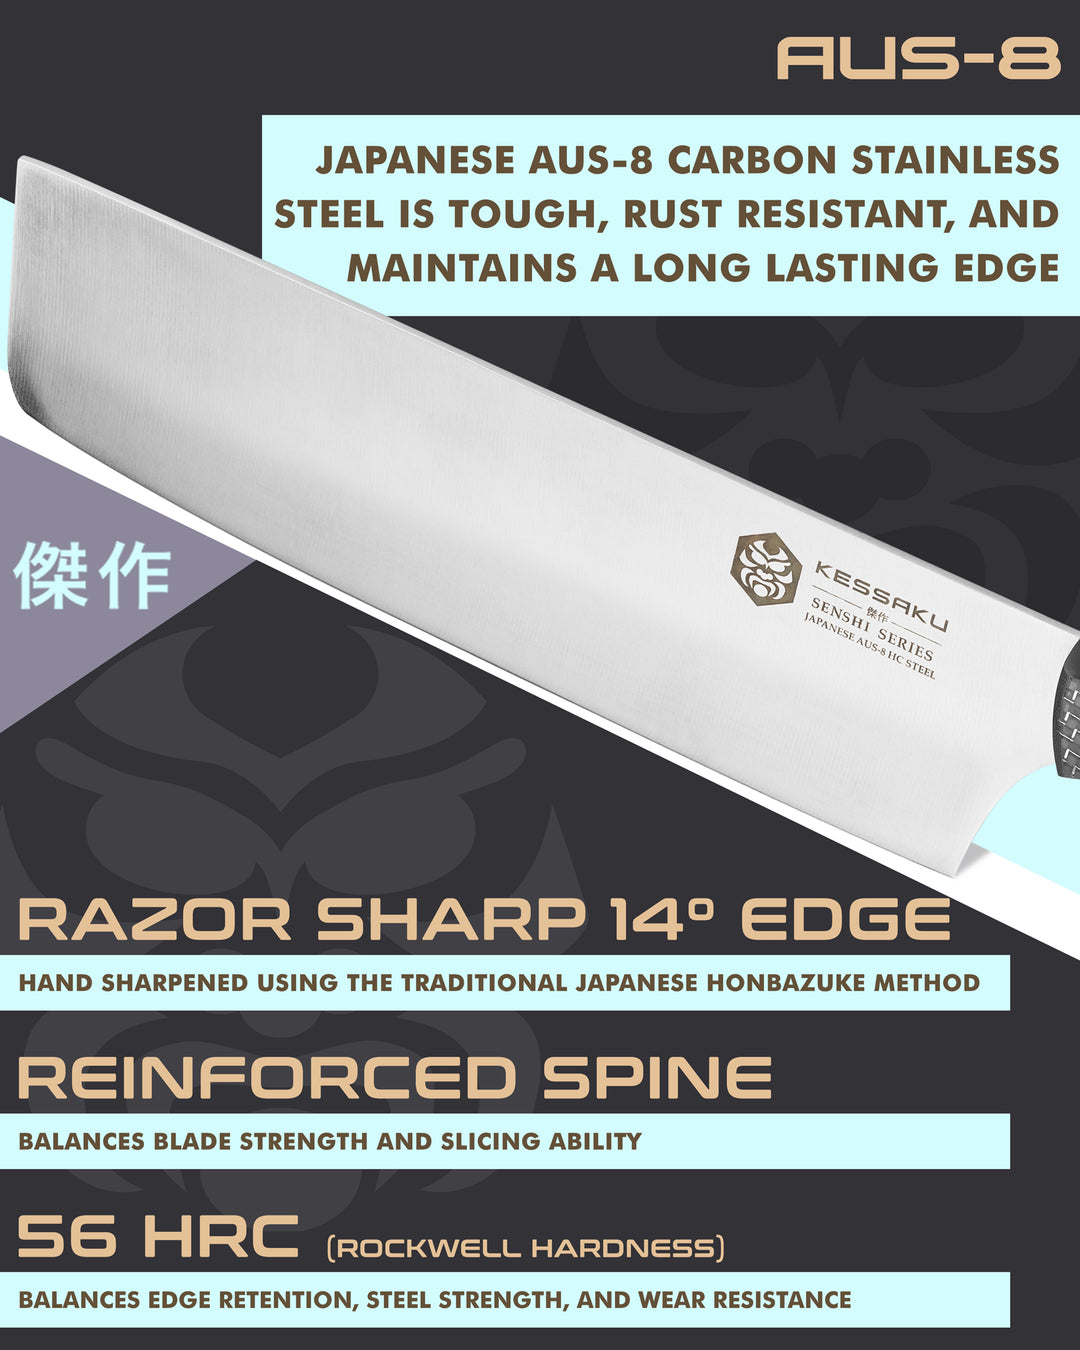 Kessaku Senshi Nakiri Knife blade features: AUS-8 steel, 56 HRC, 14 degree edge, reinforced spine